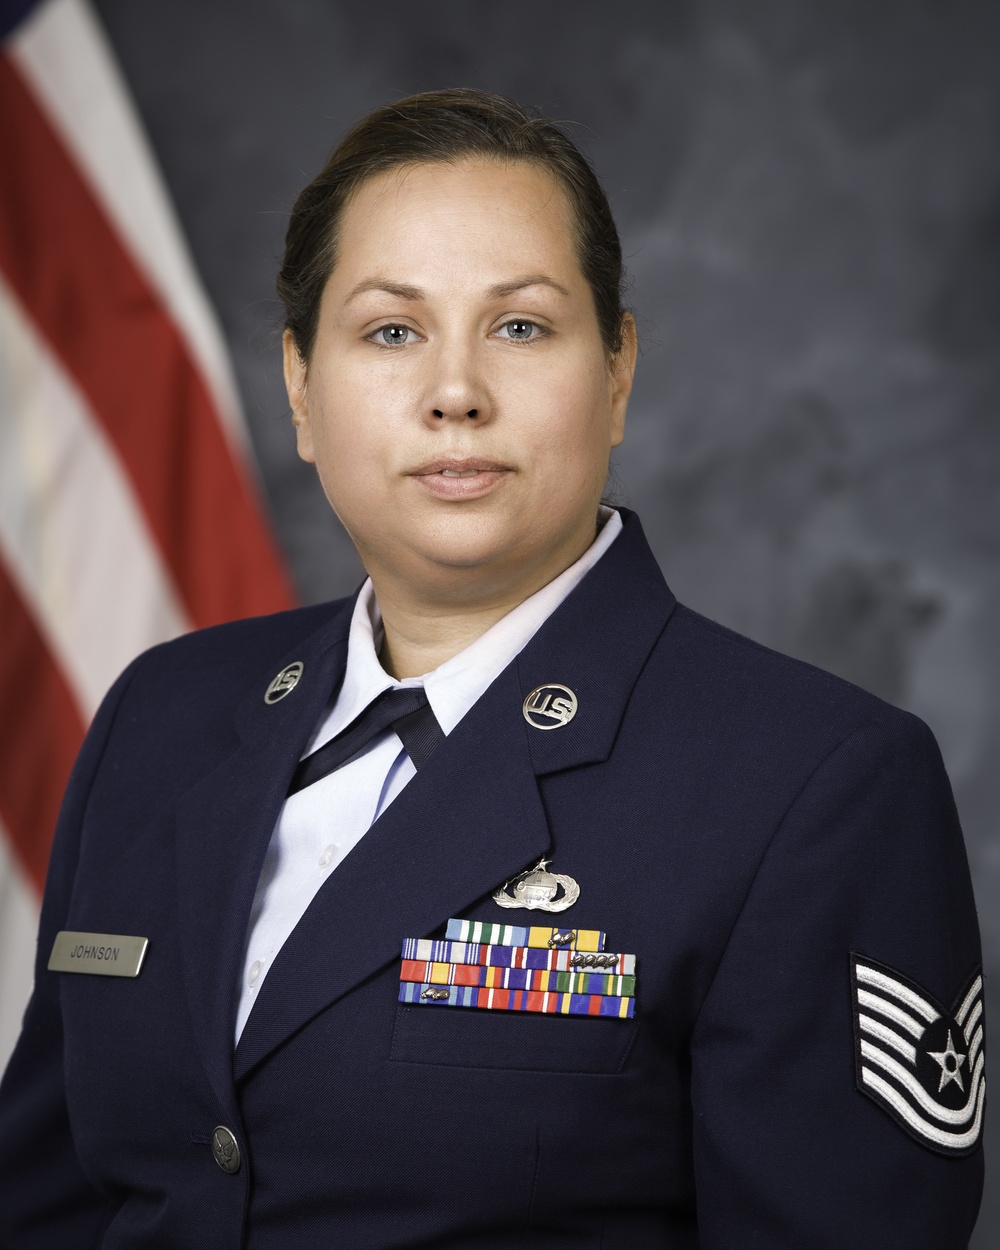 Official portrait of Technical Sgt. Mandy M. Johnson, US Air Force